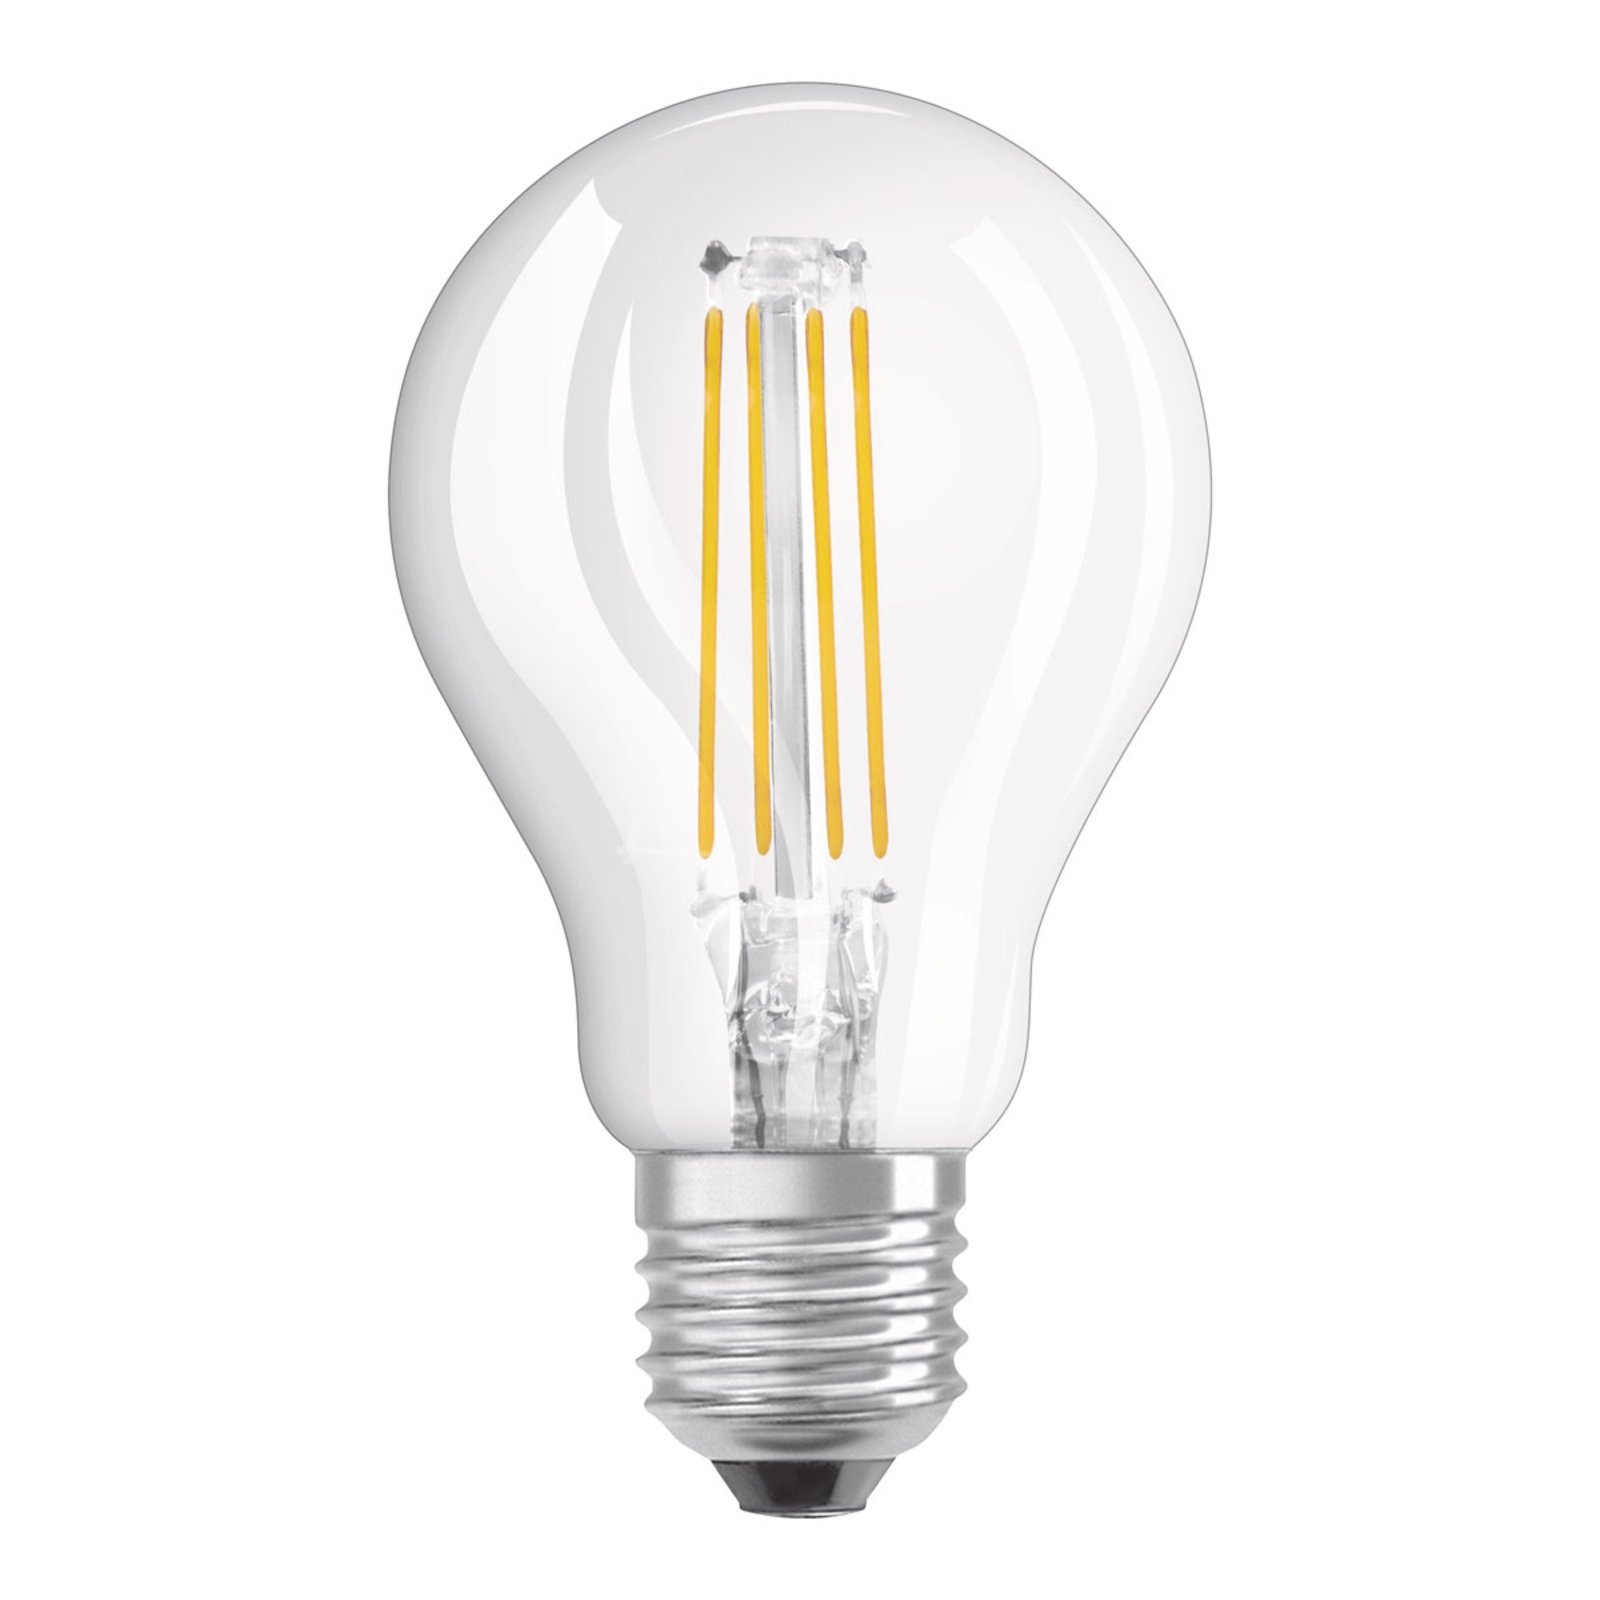 OSRAM golf ball LED bulb E27 Superstar 4.8 W clear